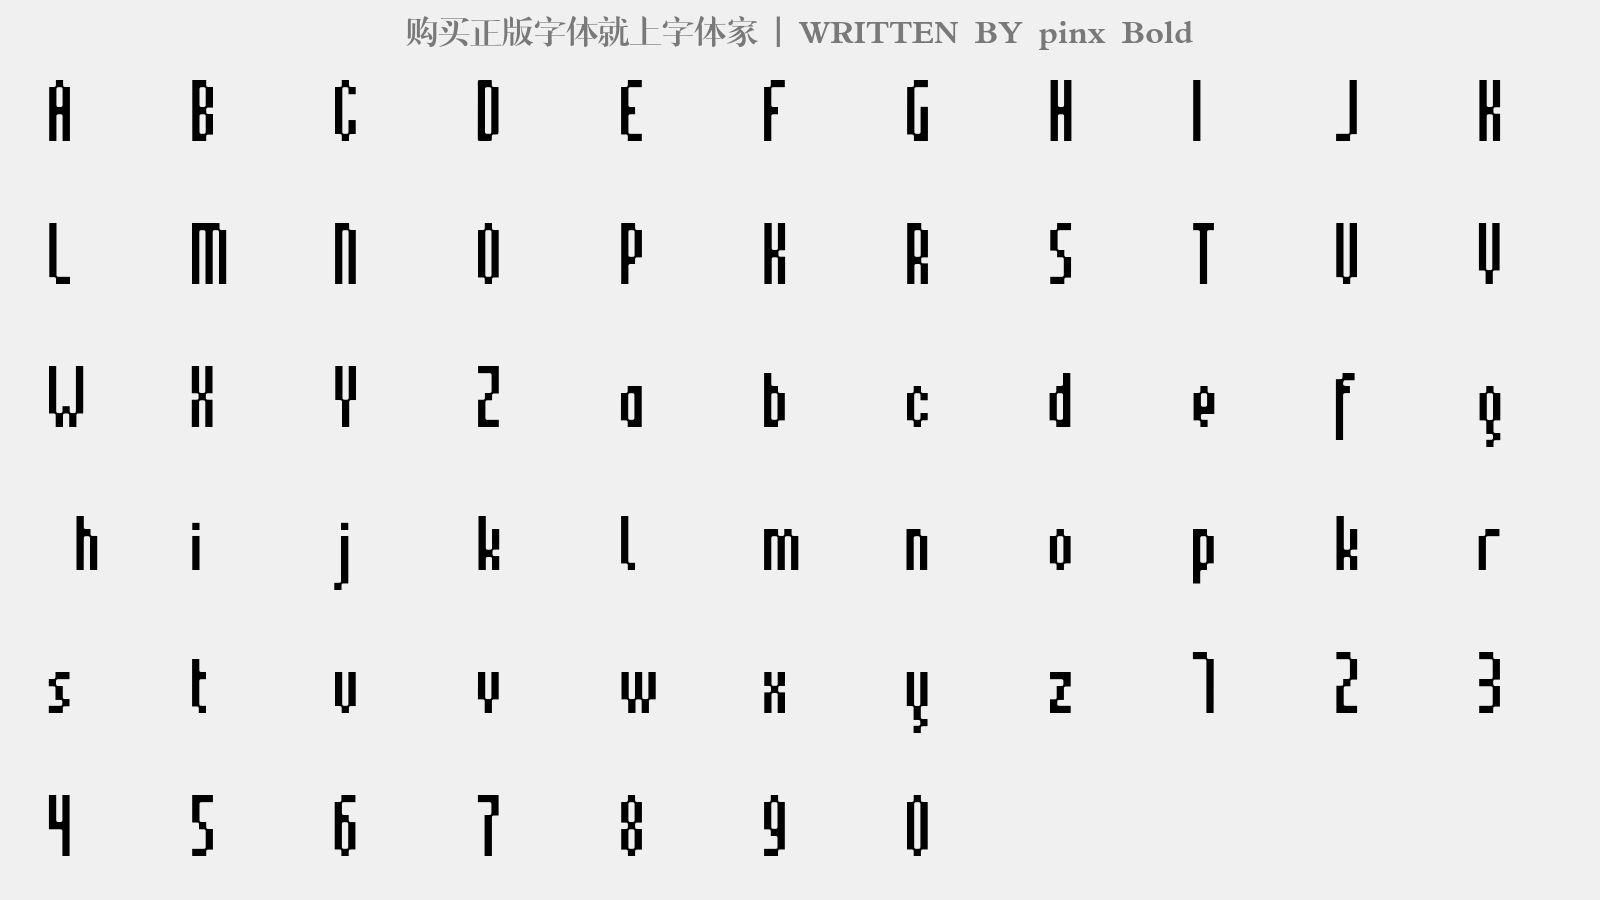 pinx Bold - 大写字母/小写字母/数字